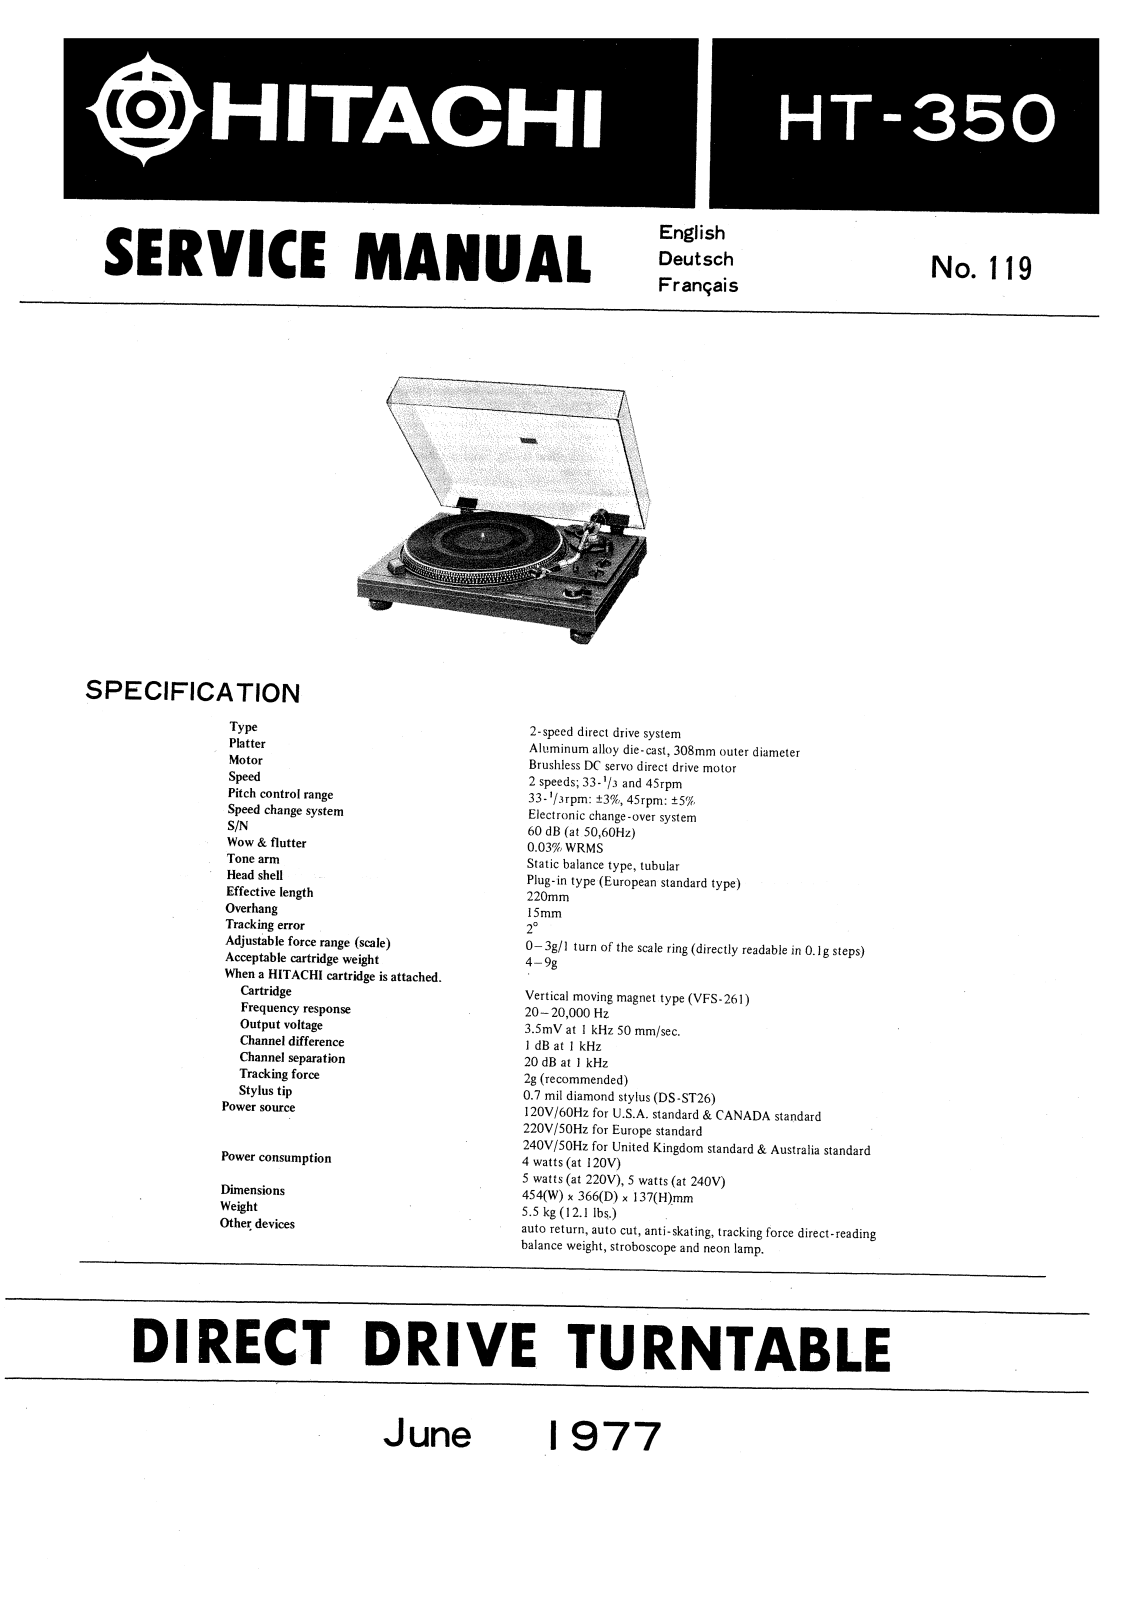 Hitachi HT-350 Service Manual